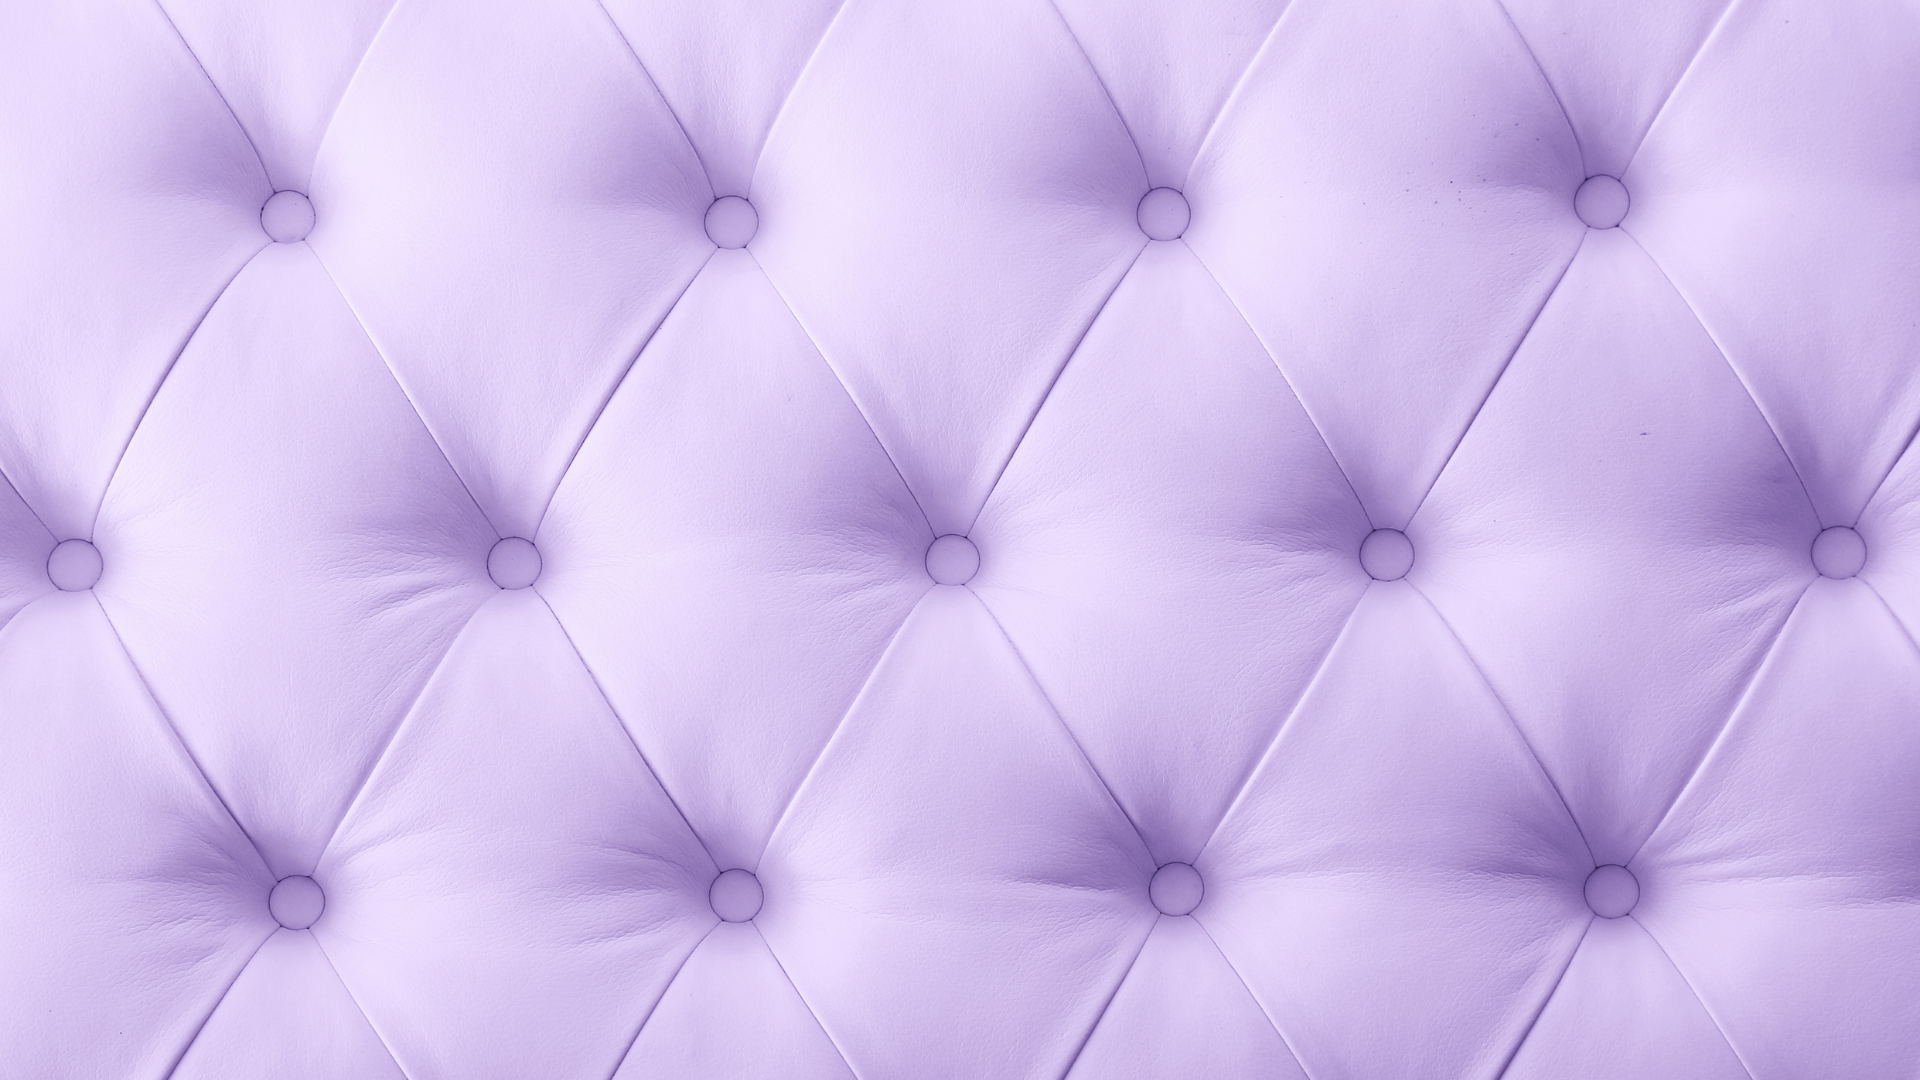 20 Cute Purple Aesthetic Wallpaper Desktop Backgrounds (FREE); Download this desktop wallpaper for free and enjoy this cute Aesthetic Purple Wallpaper!